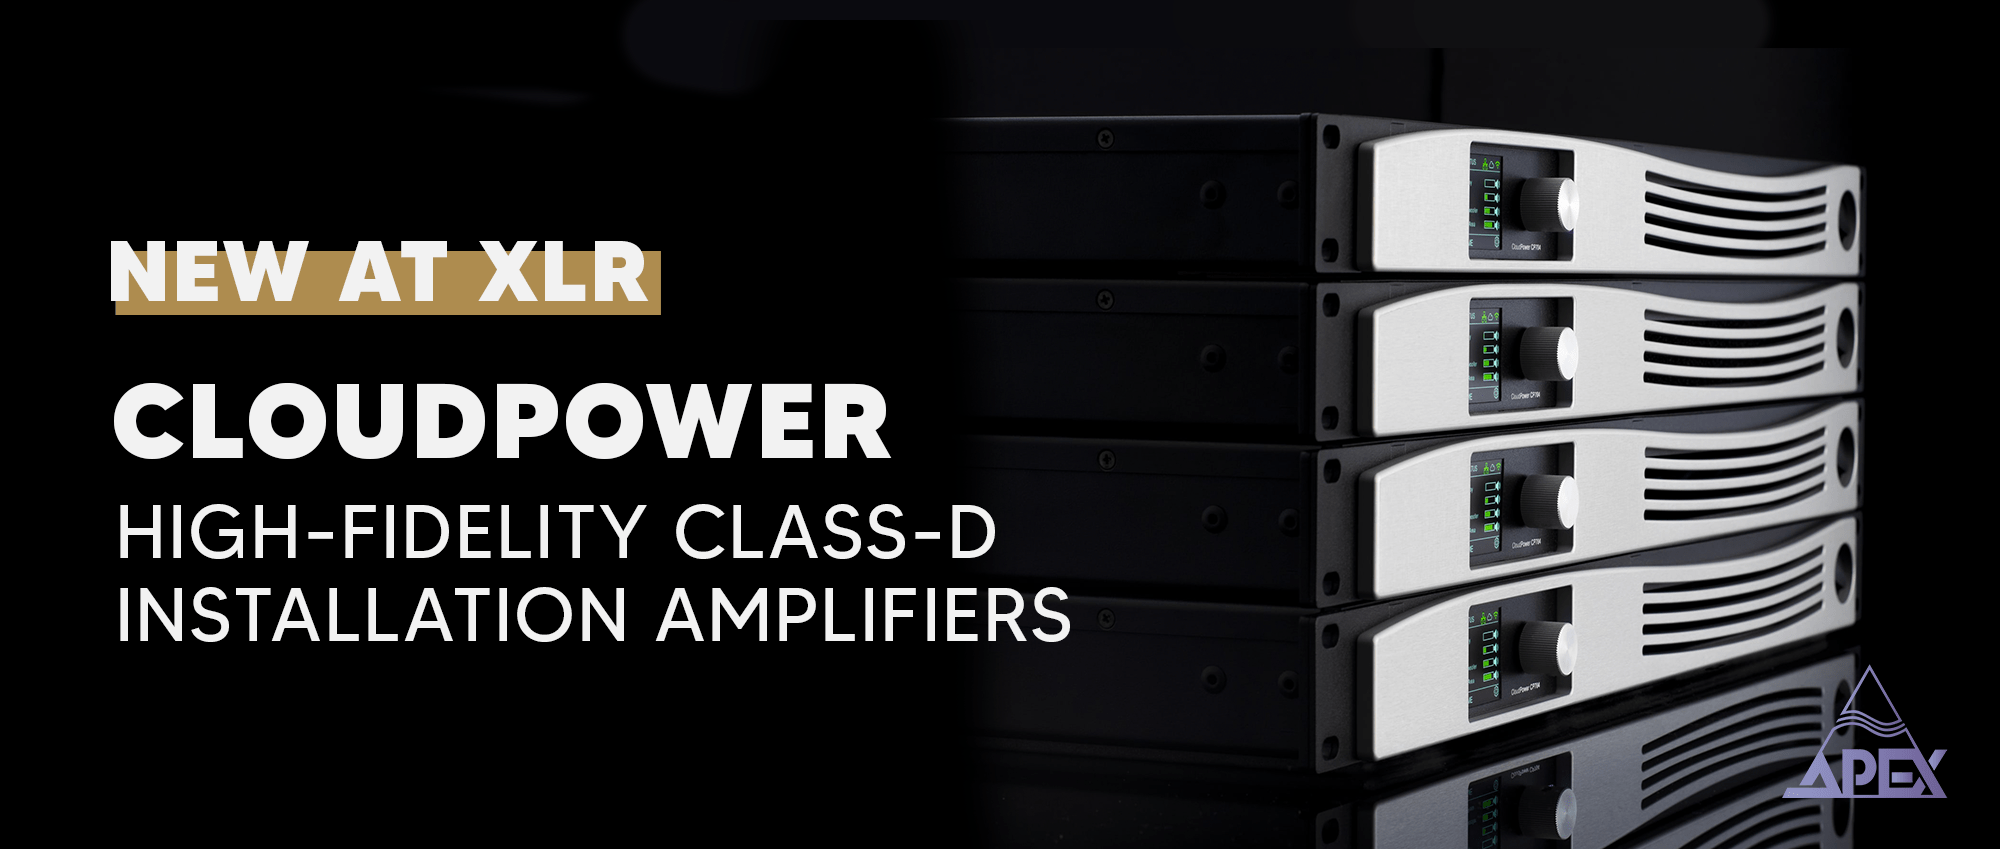 Apex - Cloudpower High-Fidelity Class-D Installation Amplifiers